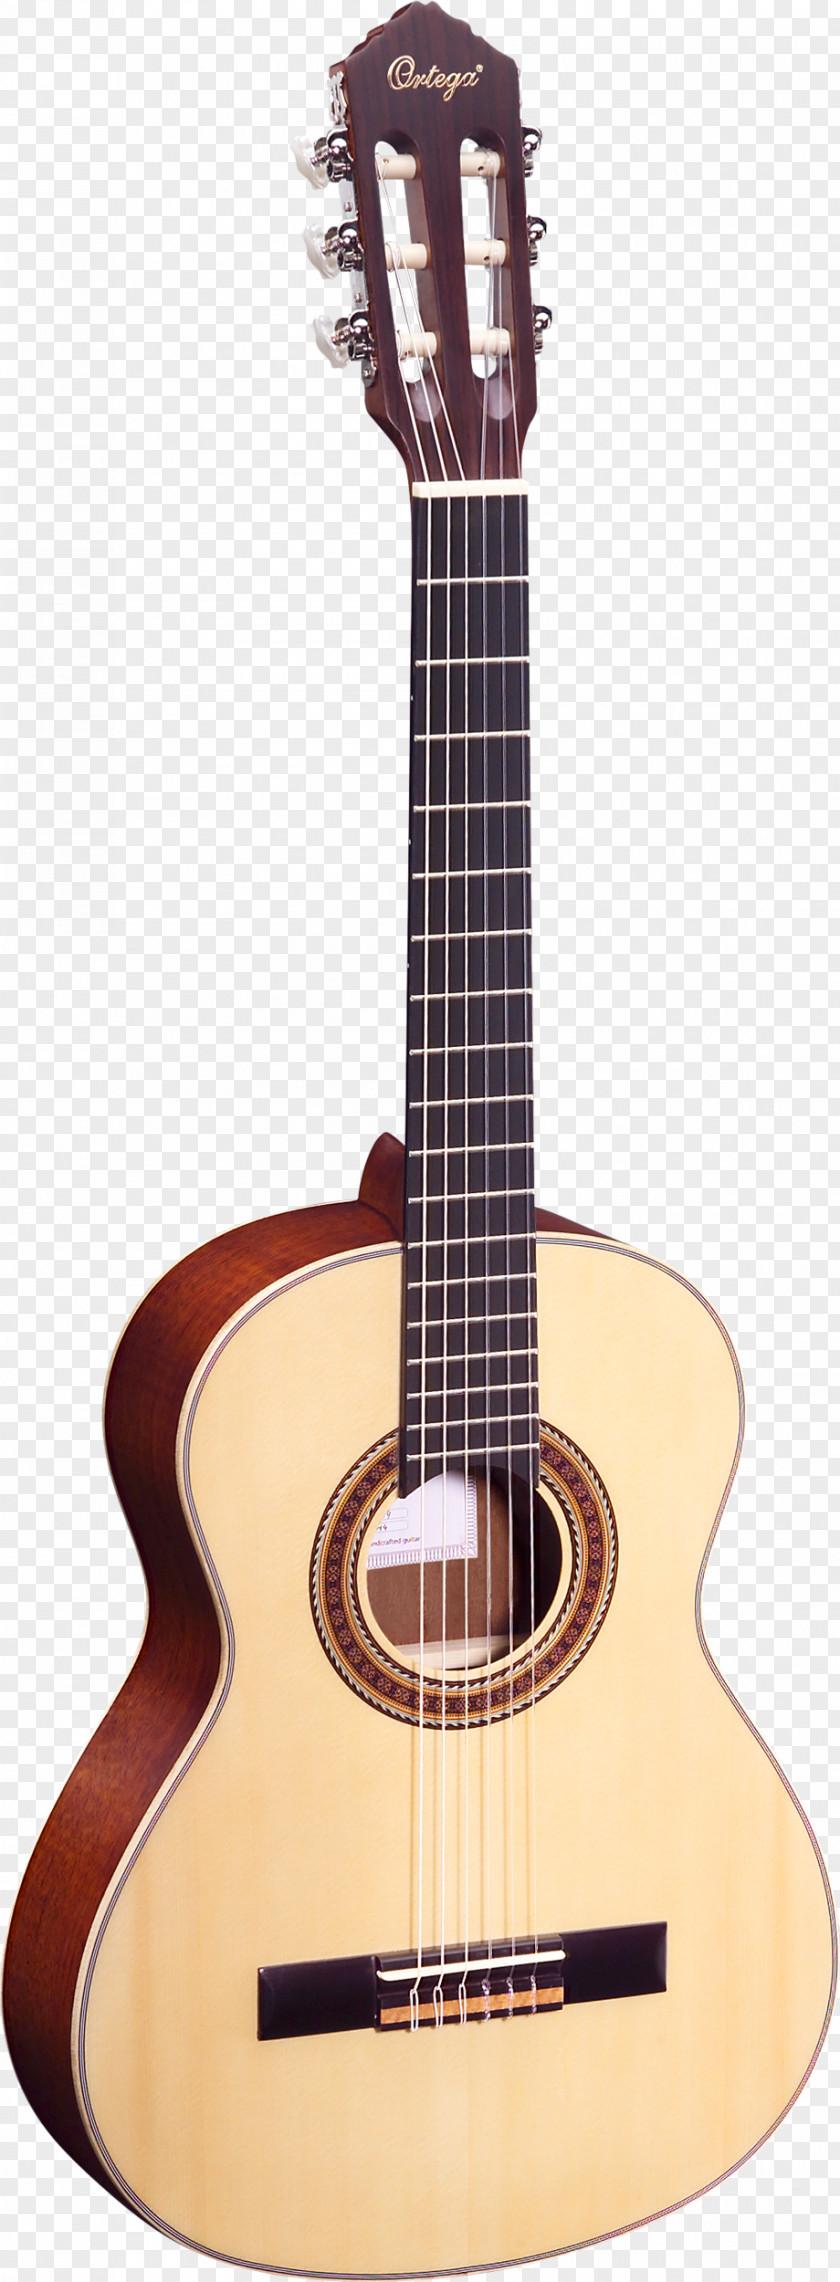 Amancio Ortega Twelve-string Guitar Steel-string Acoustic Acoustic-electric Musical Instruments PNG